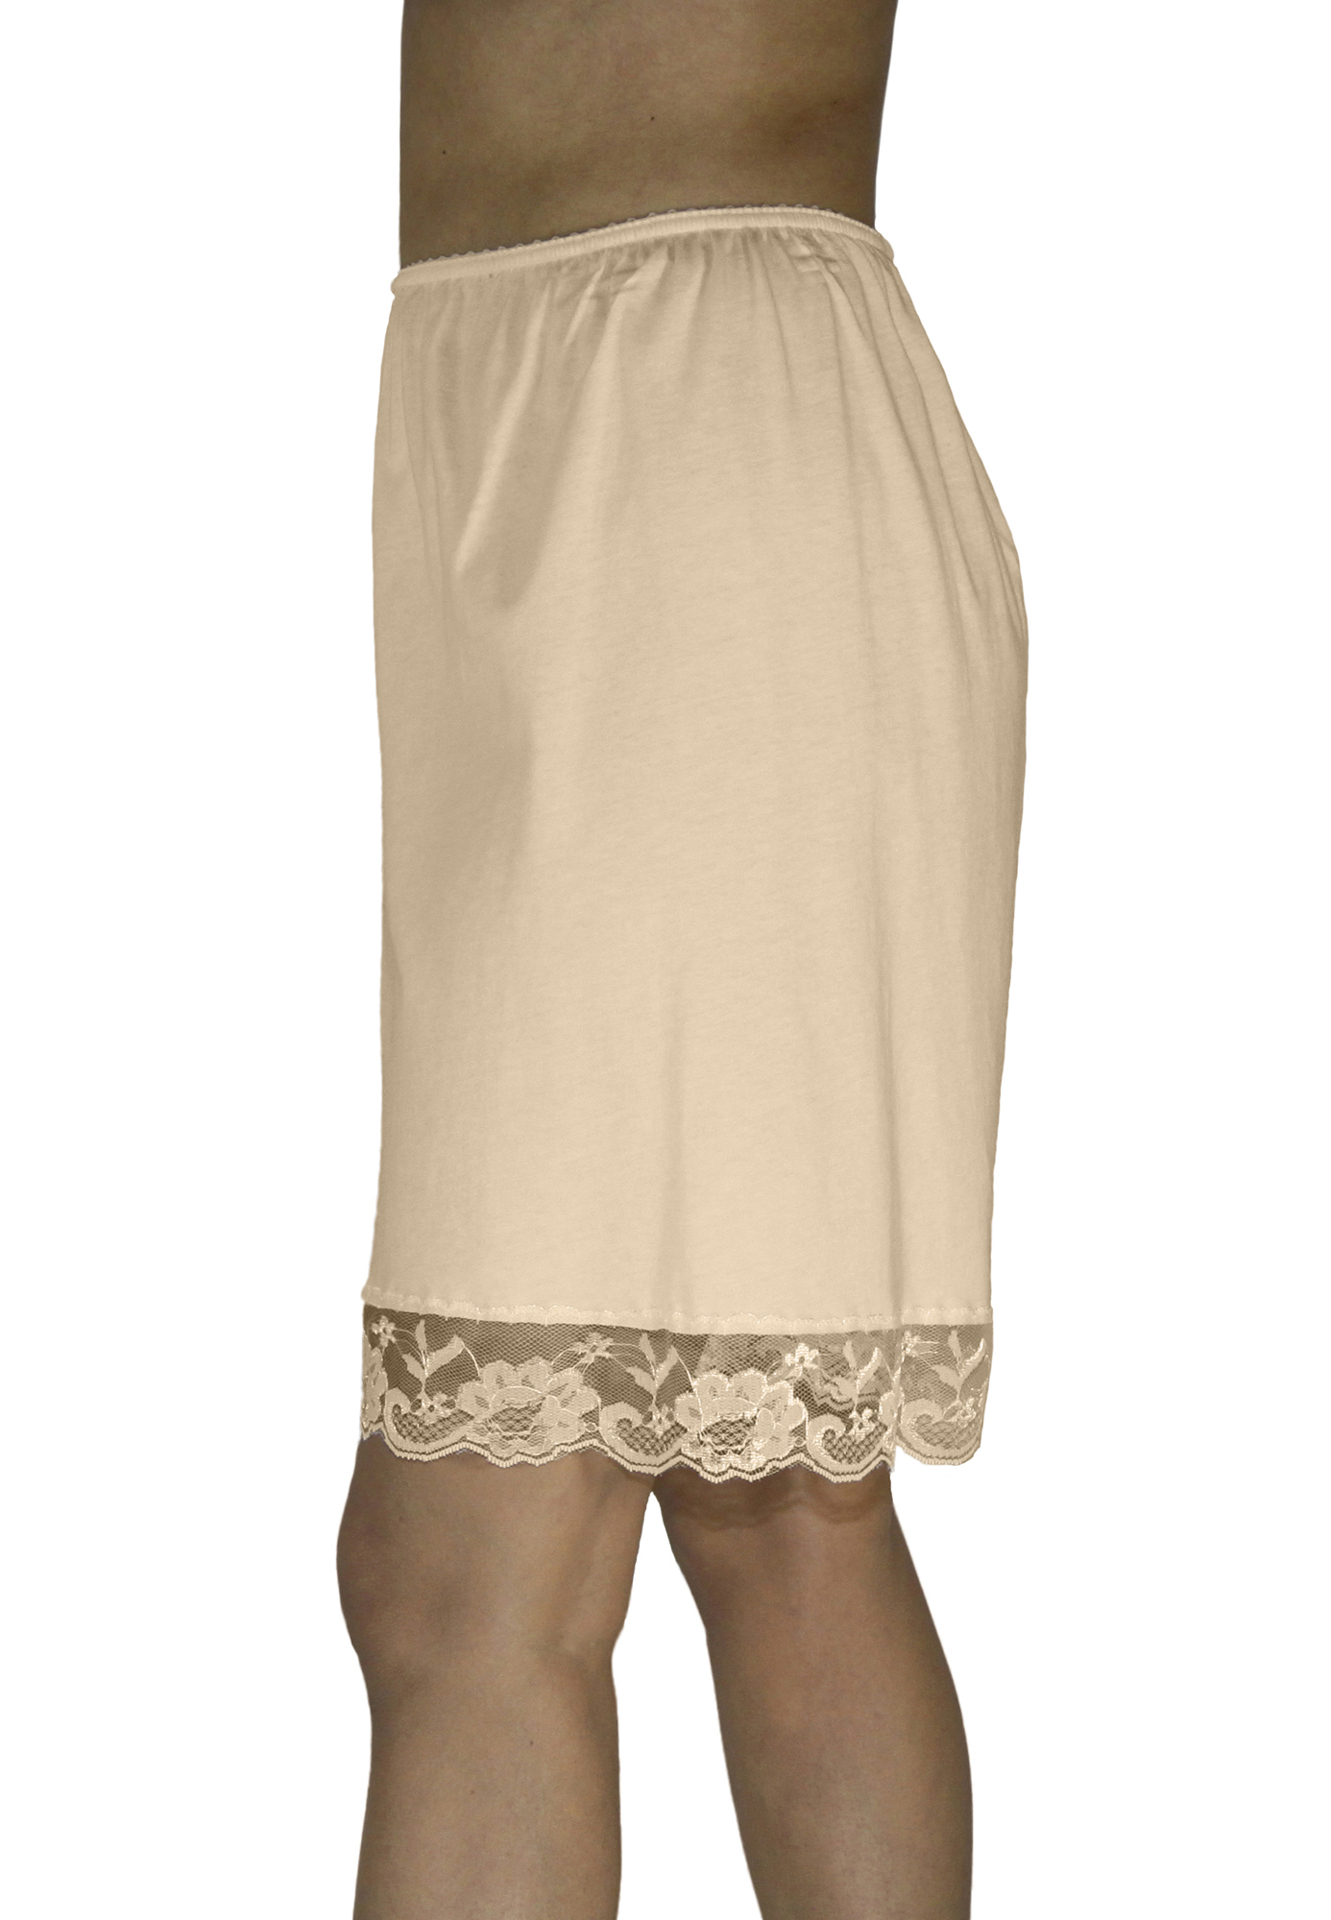 https://www.underworks.com/images/thumbs/0002255_women-pettipants-cotton-knit-culotte-slip-bloomers-split-skirt-9-inch-inseam.jpeg